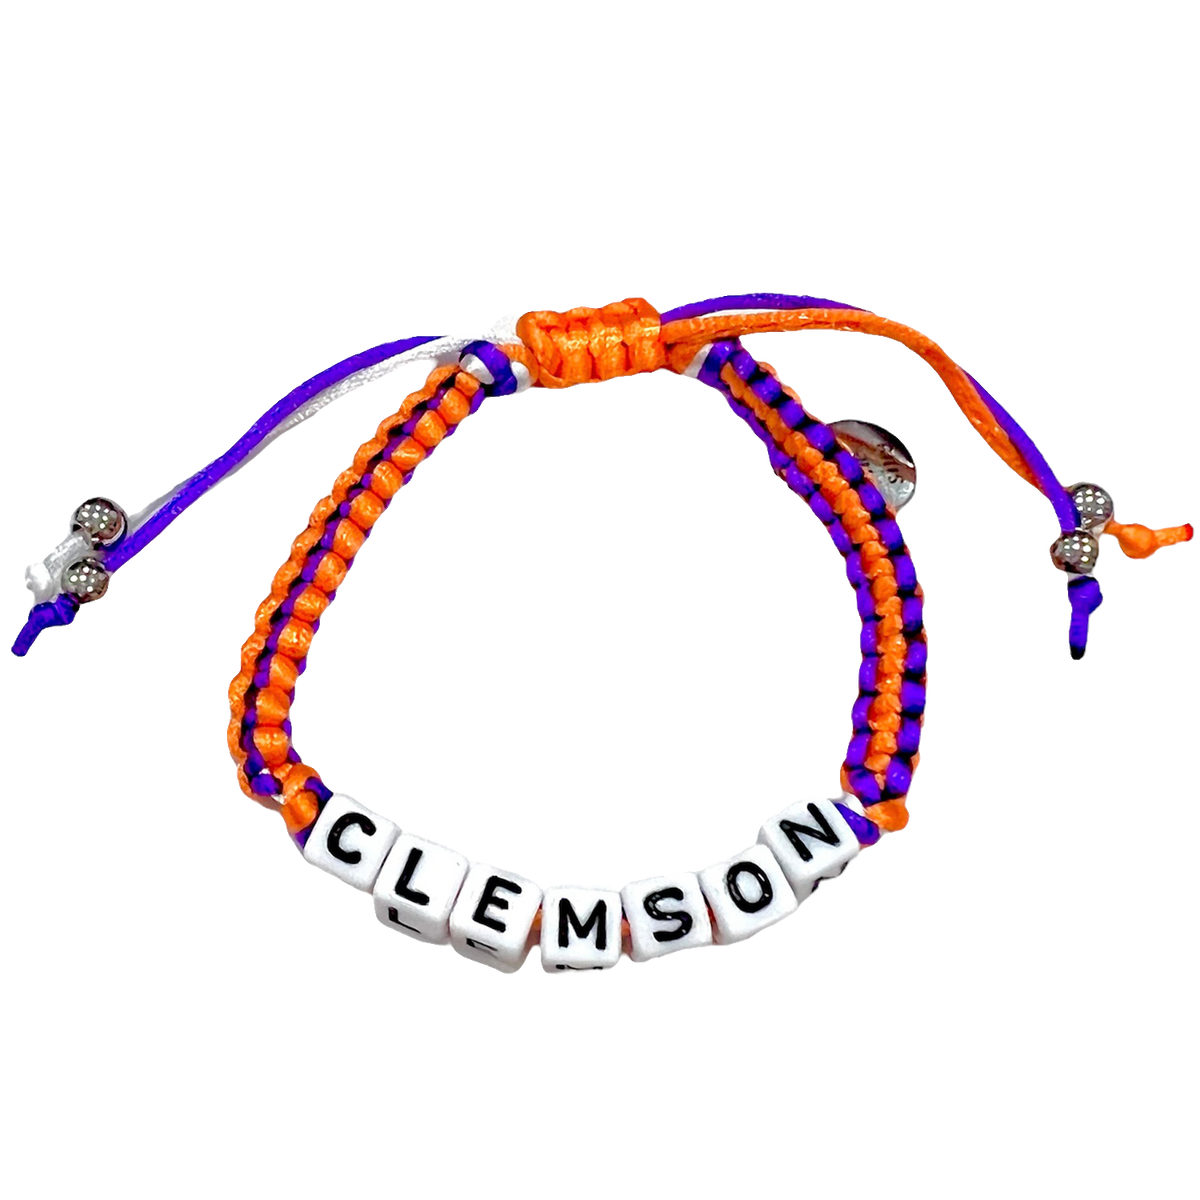 Clemson Box Braid Bracelet